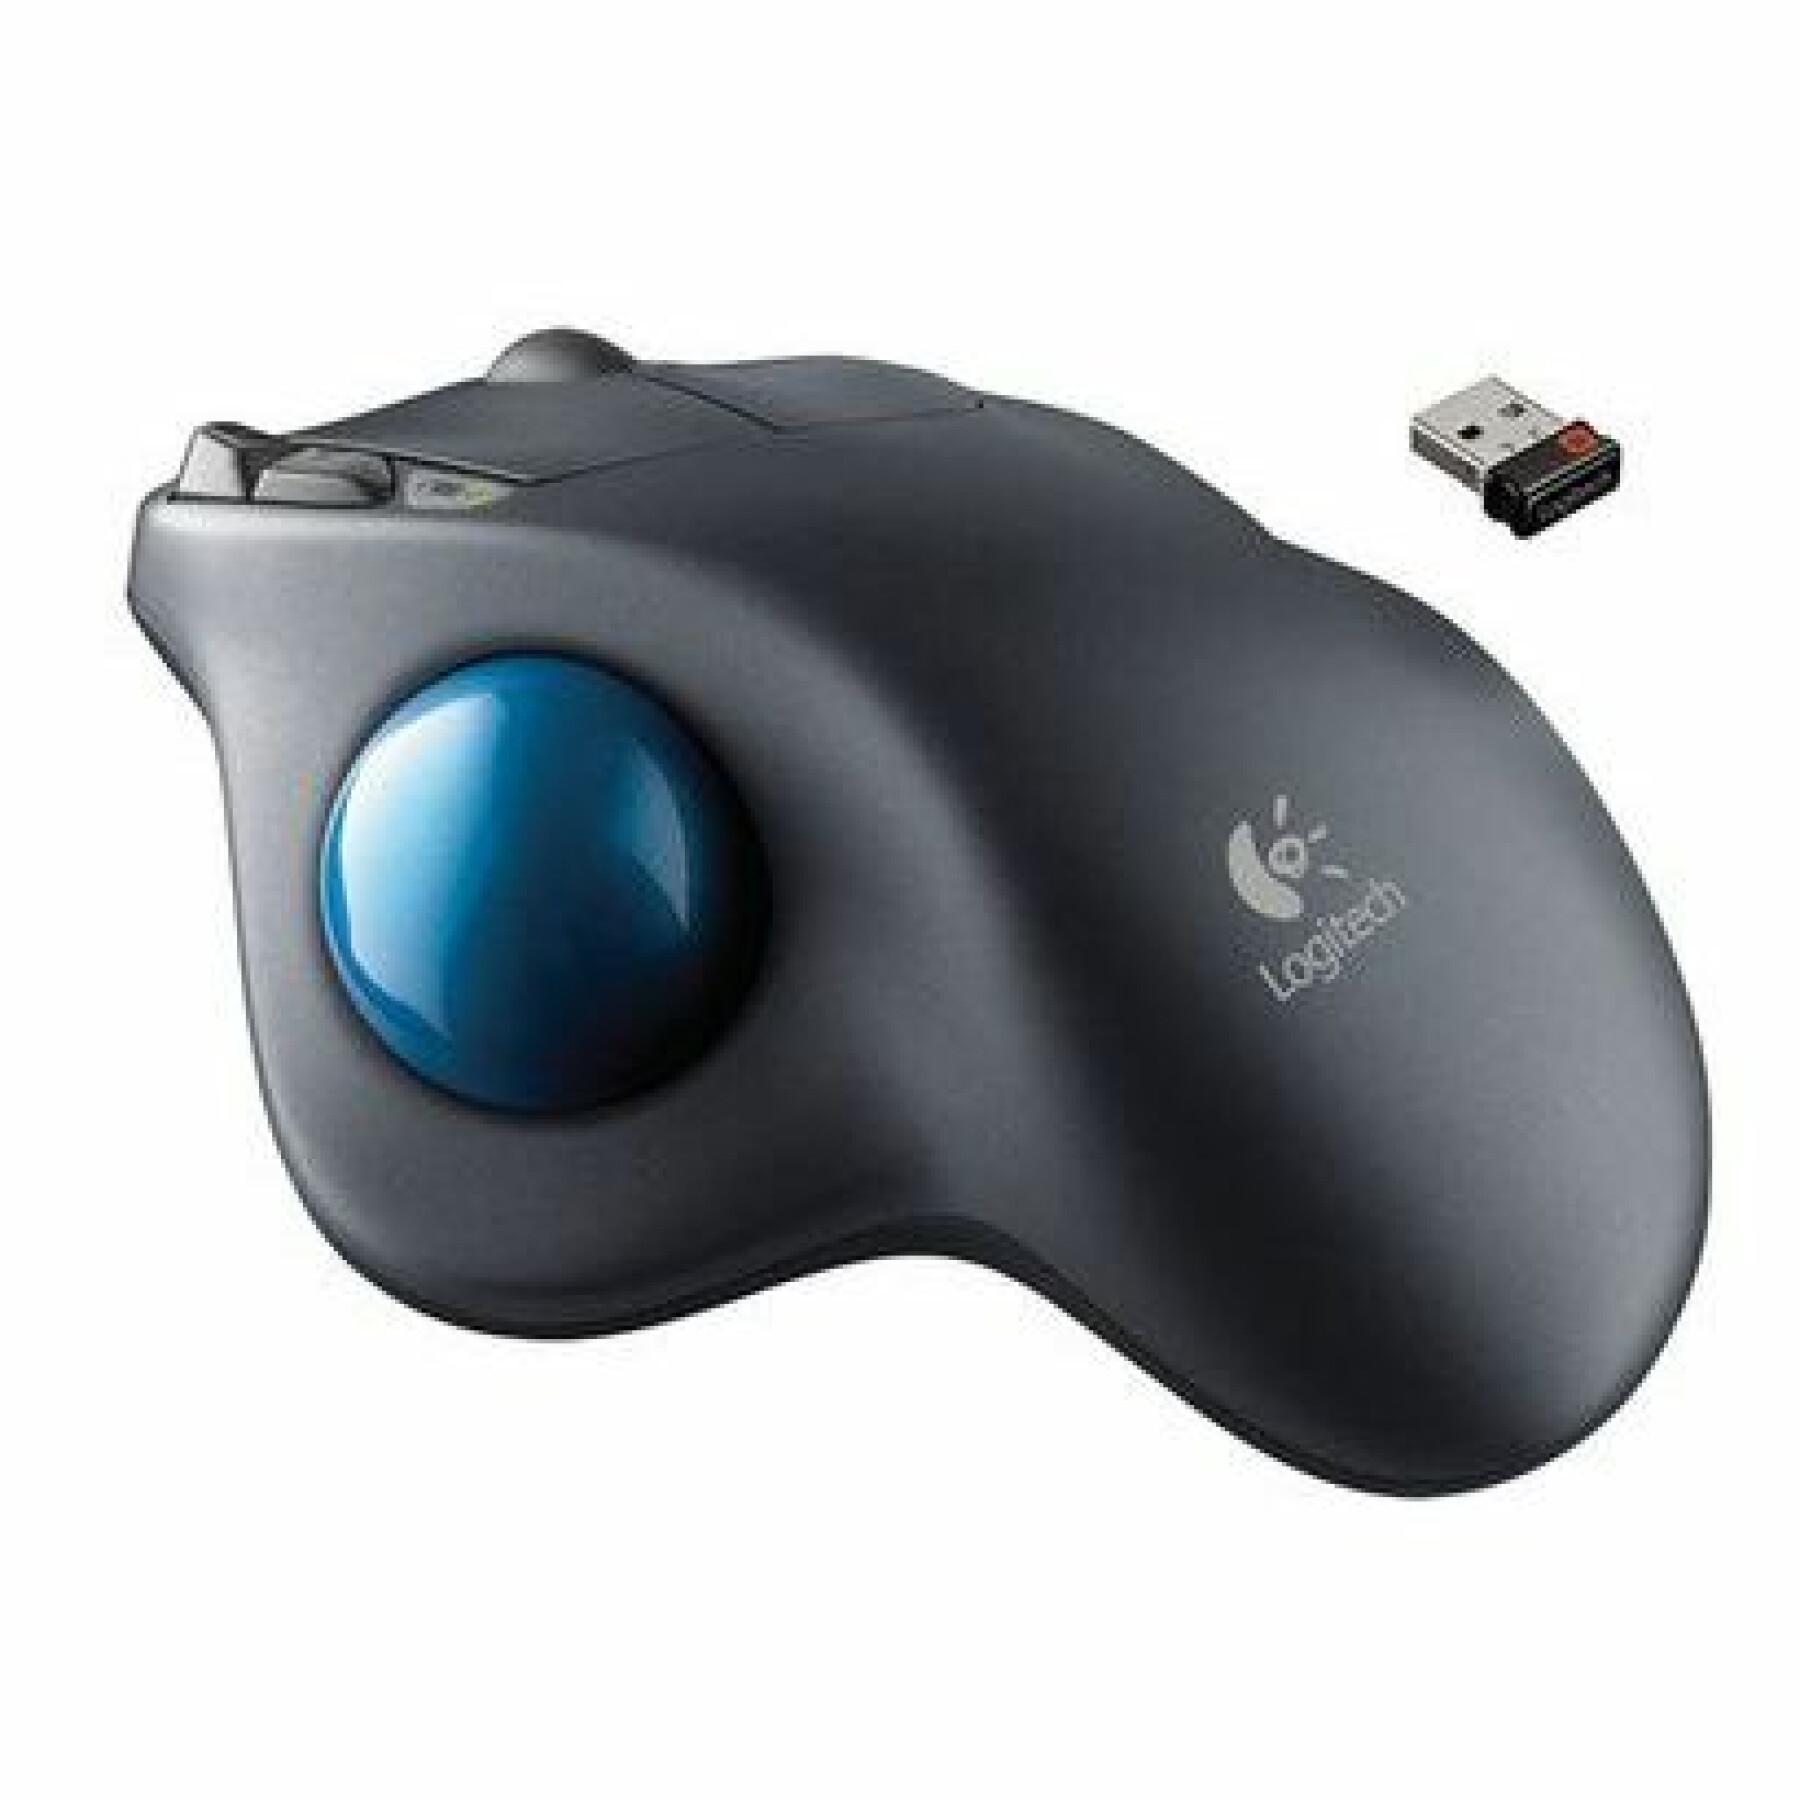 Wireless mouse M.C Marine SR-TR03 Trackball Logitech